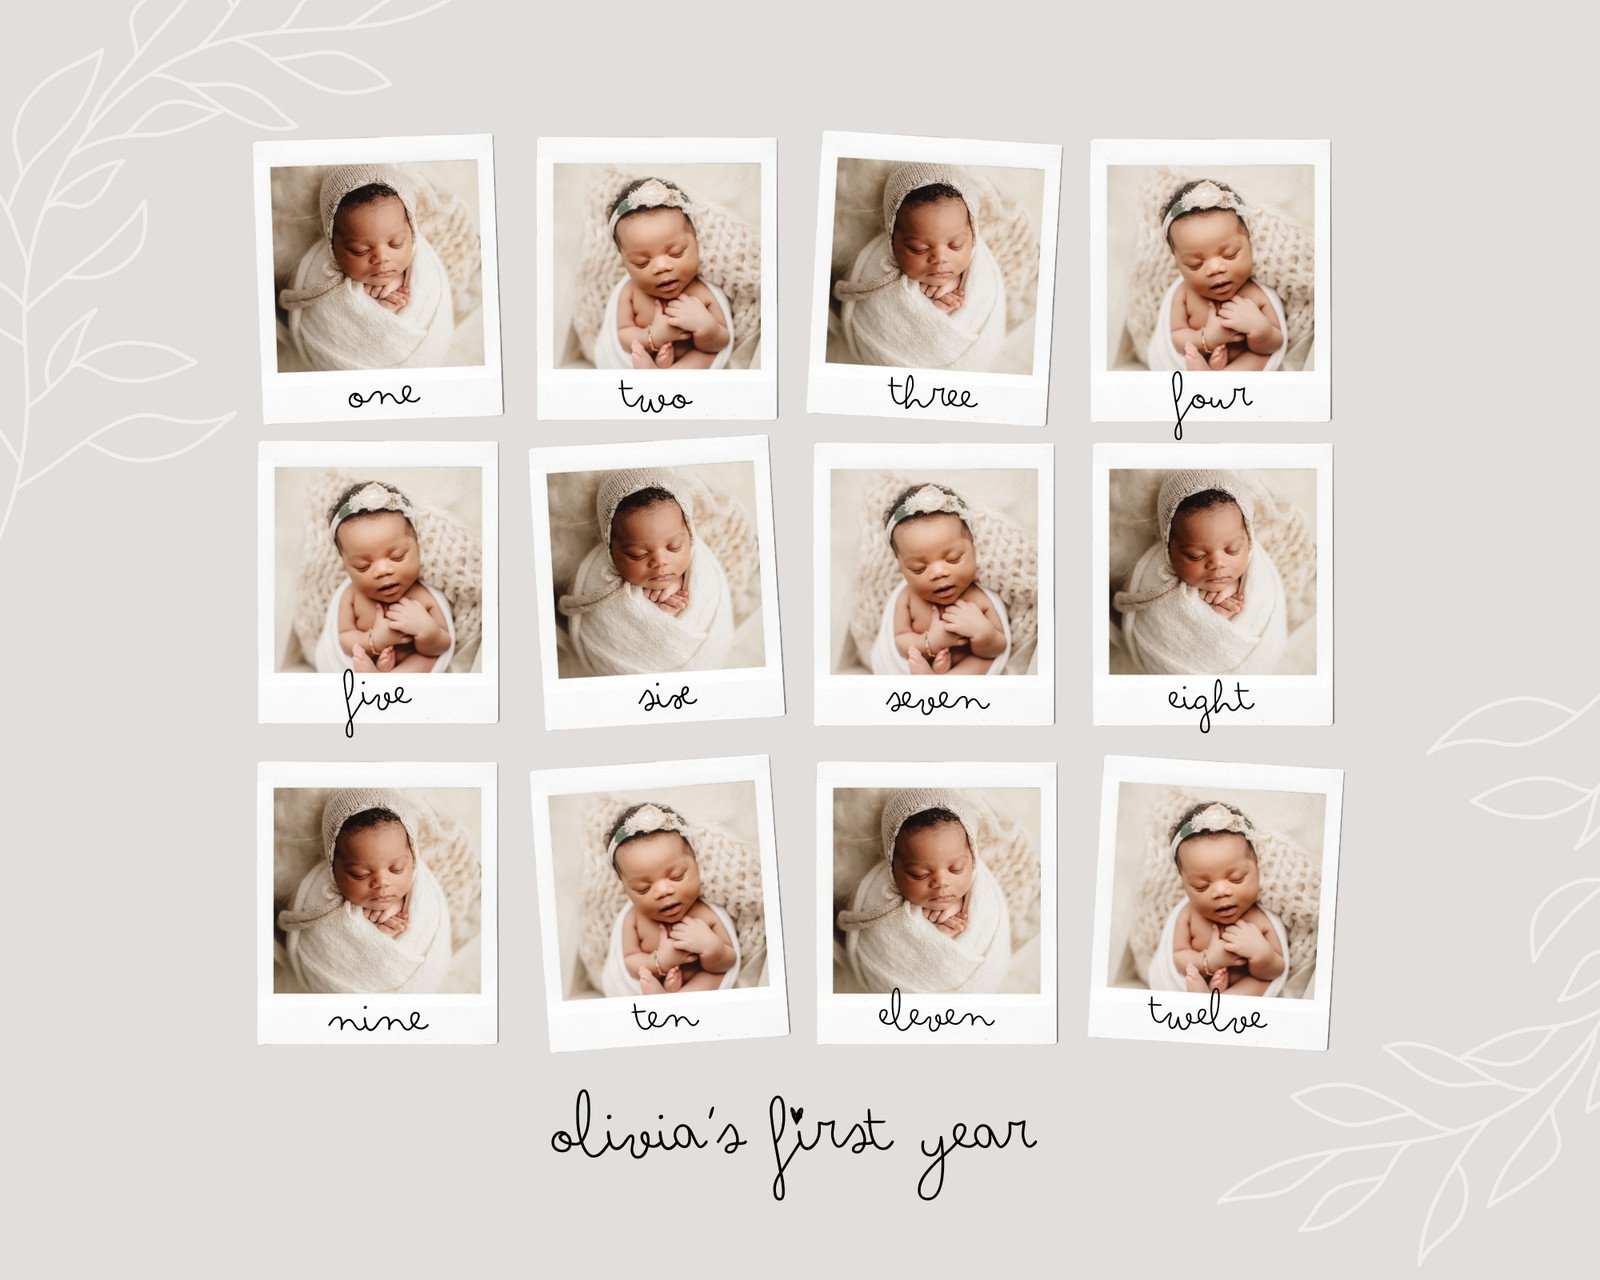 Free, fun and customizable birthday photo collage templates | Canva